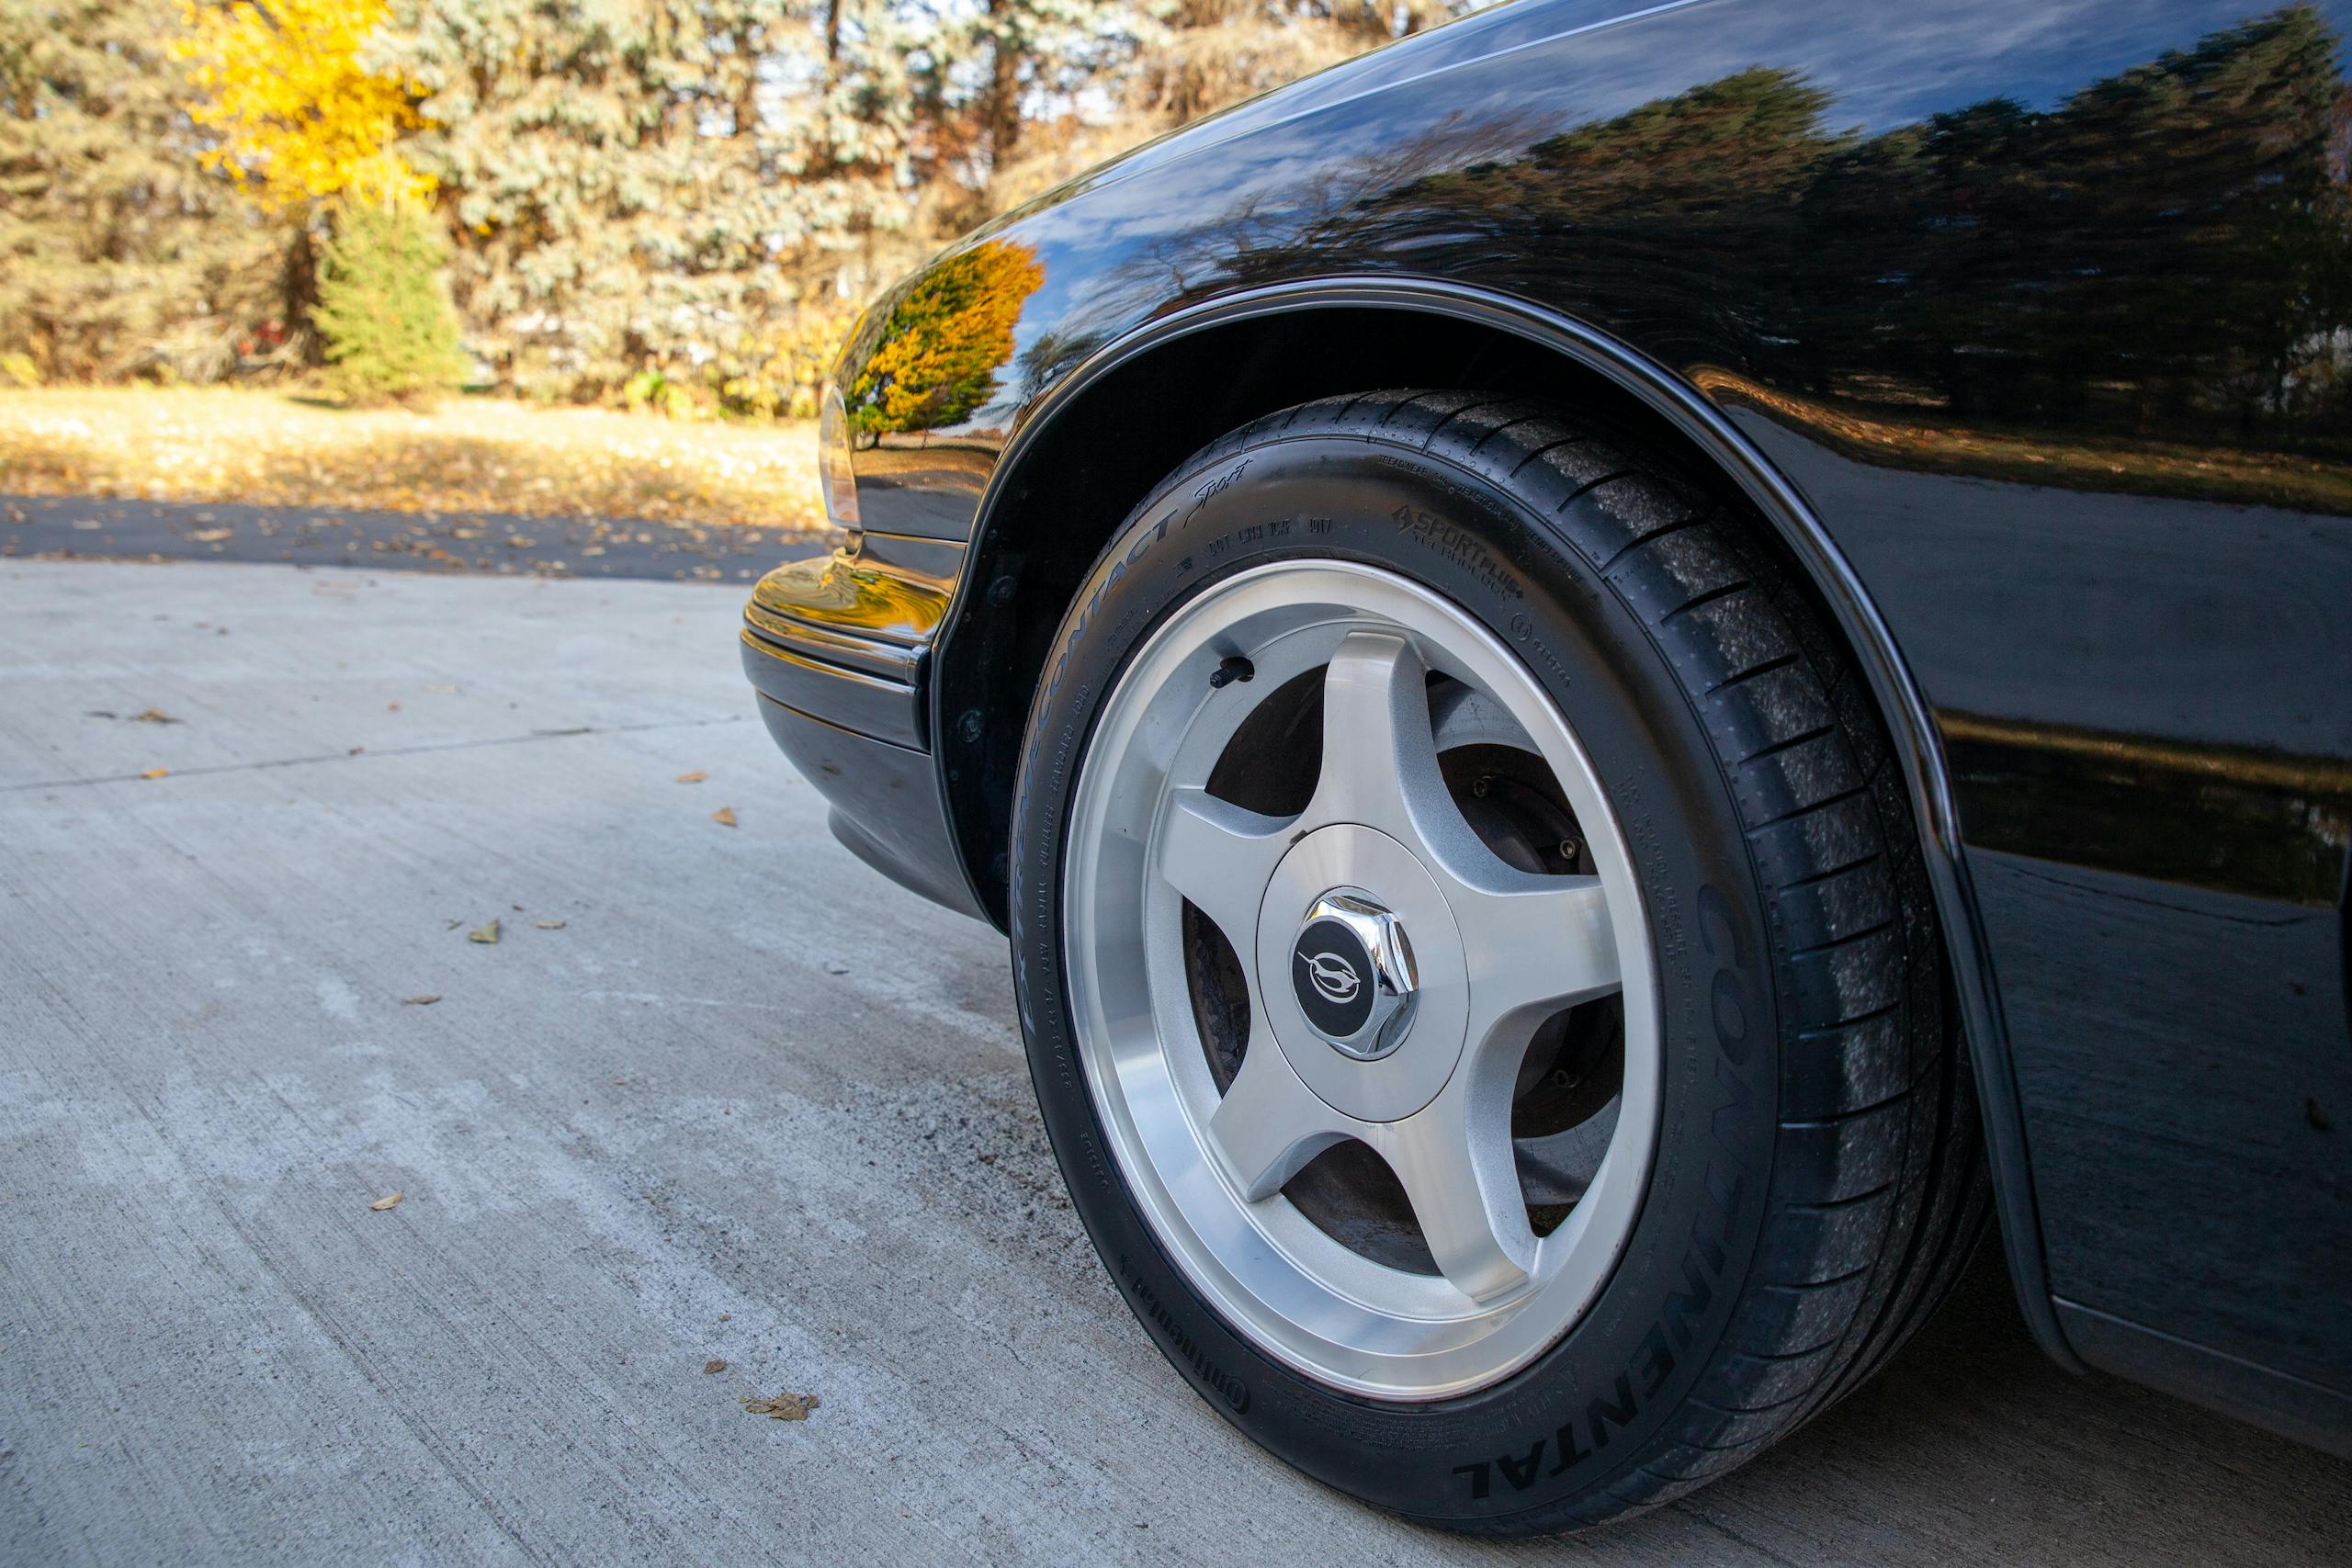 1996 Chevrolet Impala SS front wheel tire